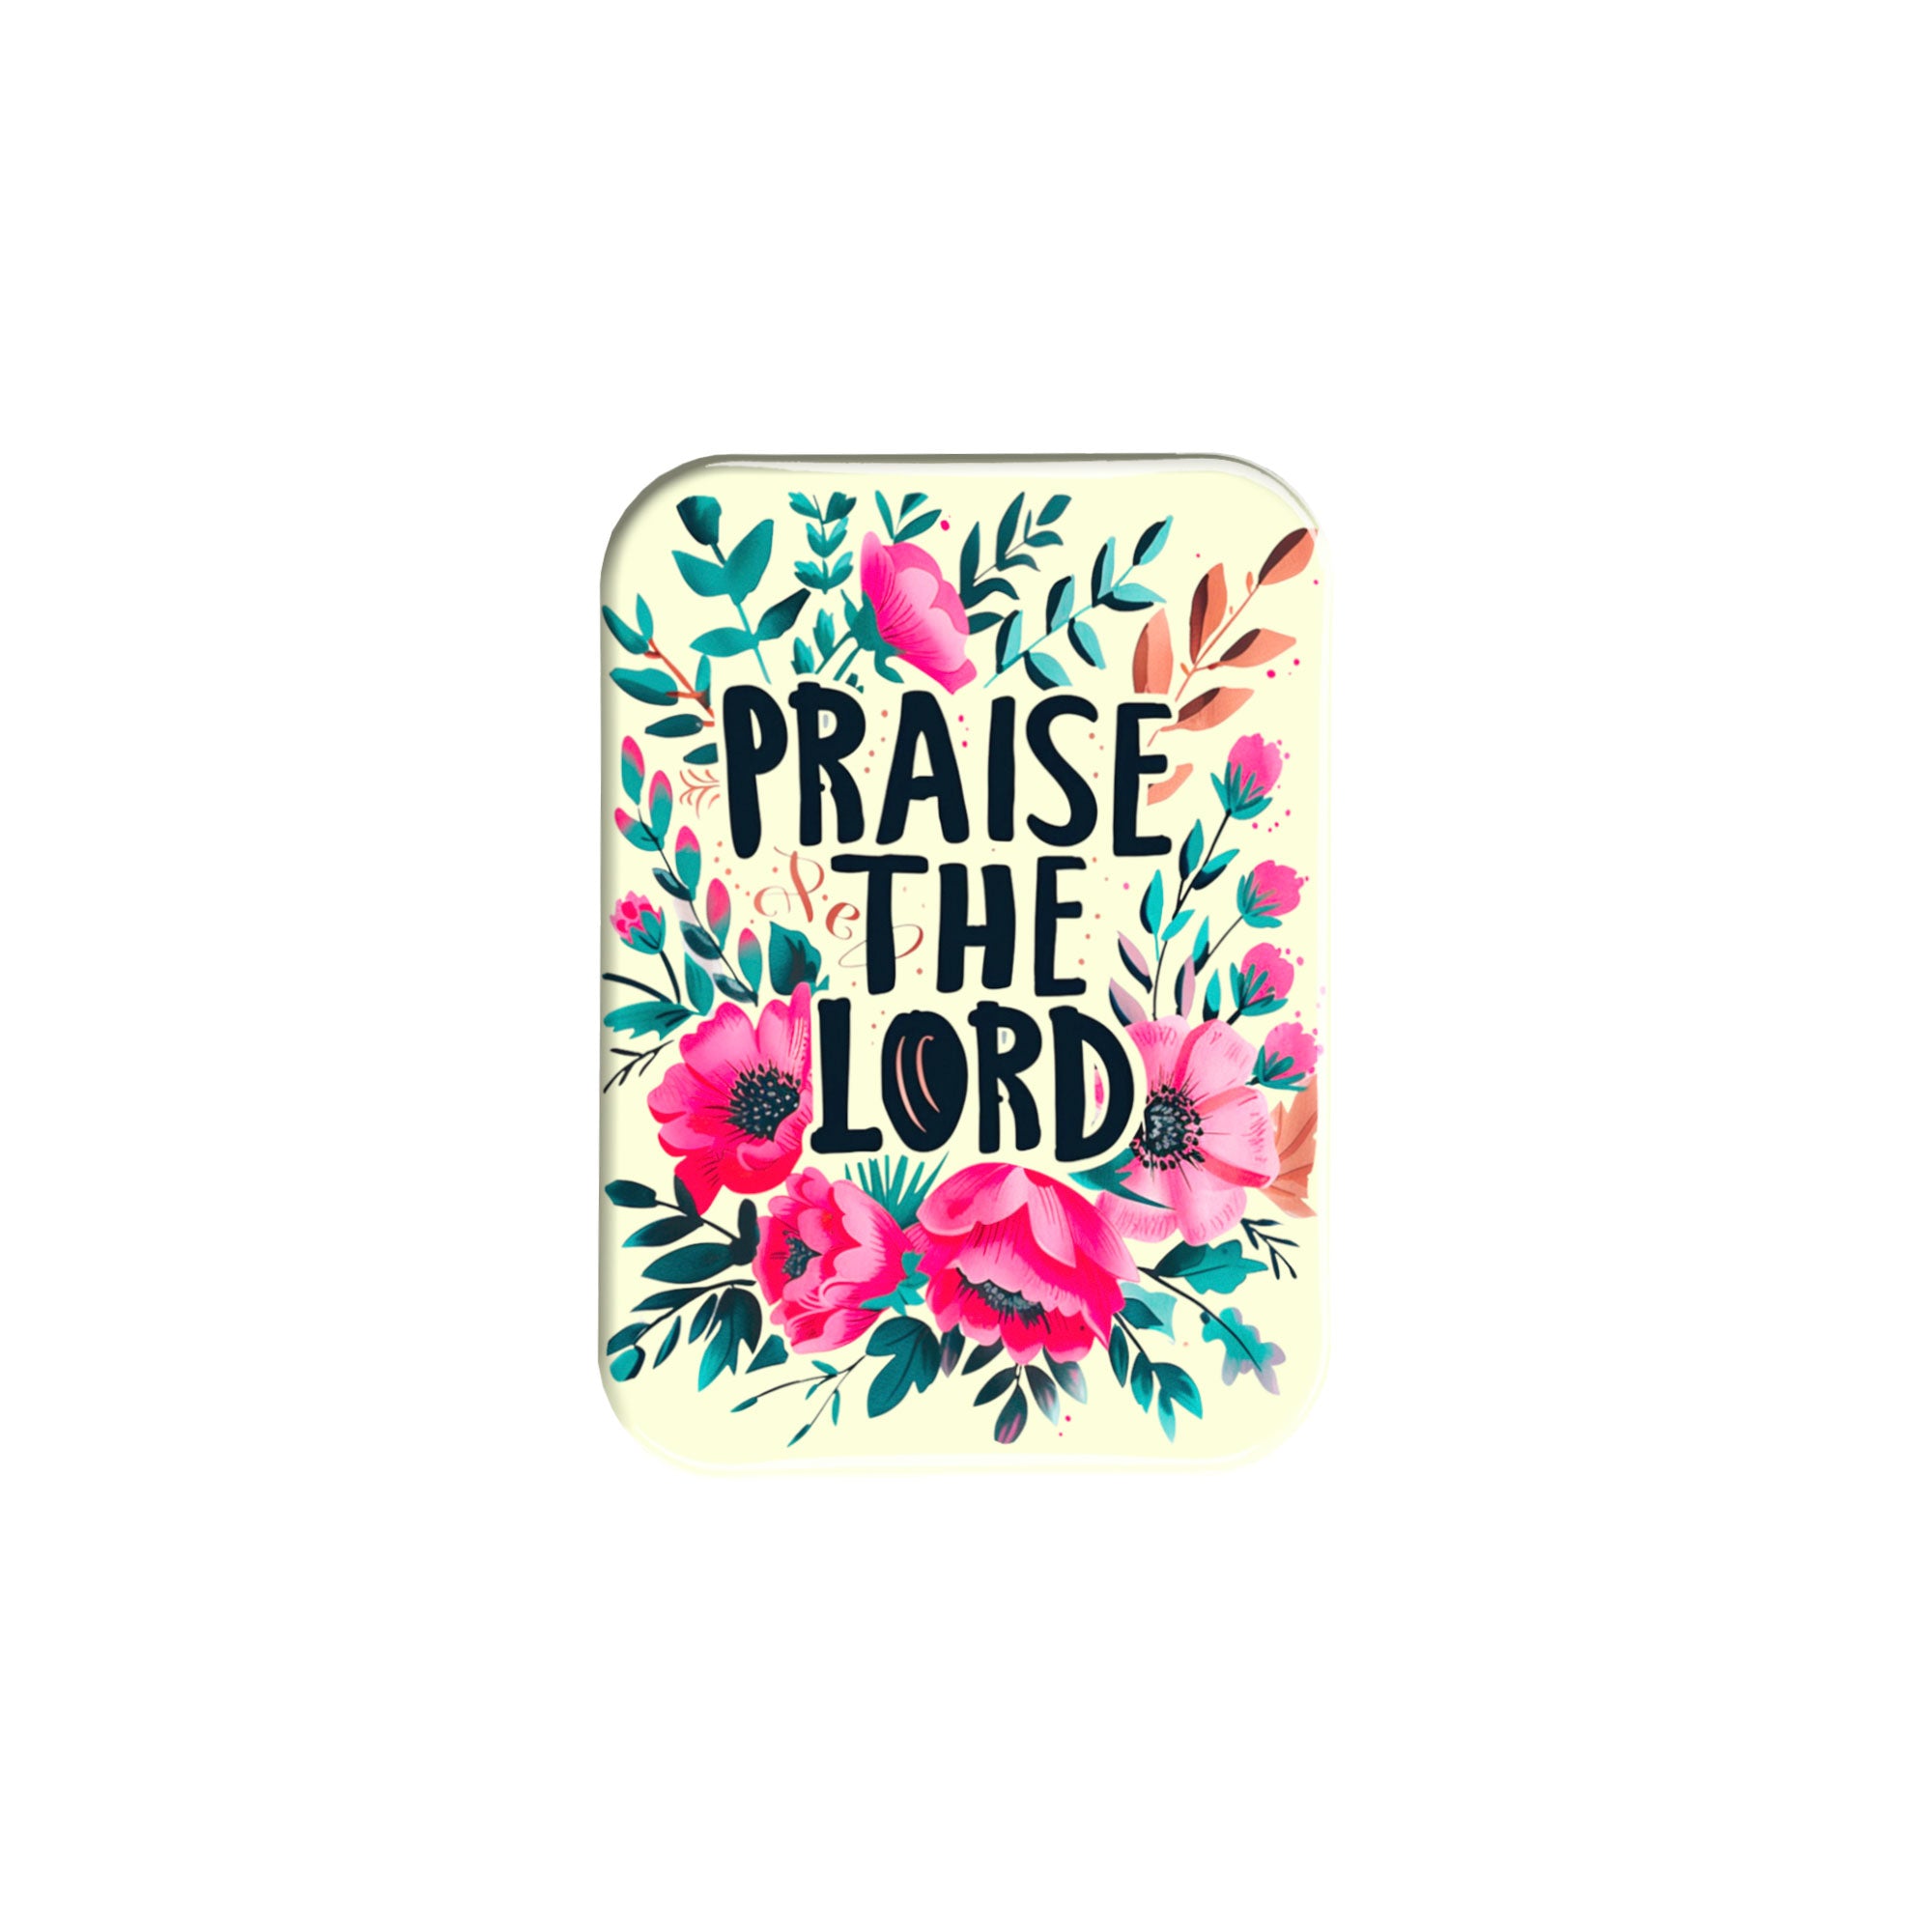 "Praise the Lord" - 2.5" X 3.5" Rectangle Fridge Magnets